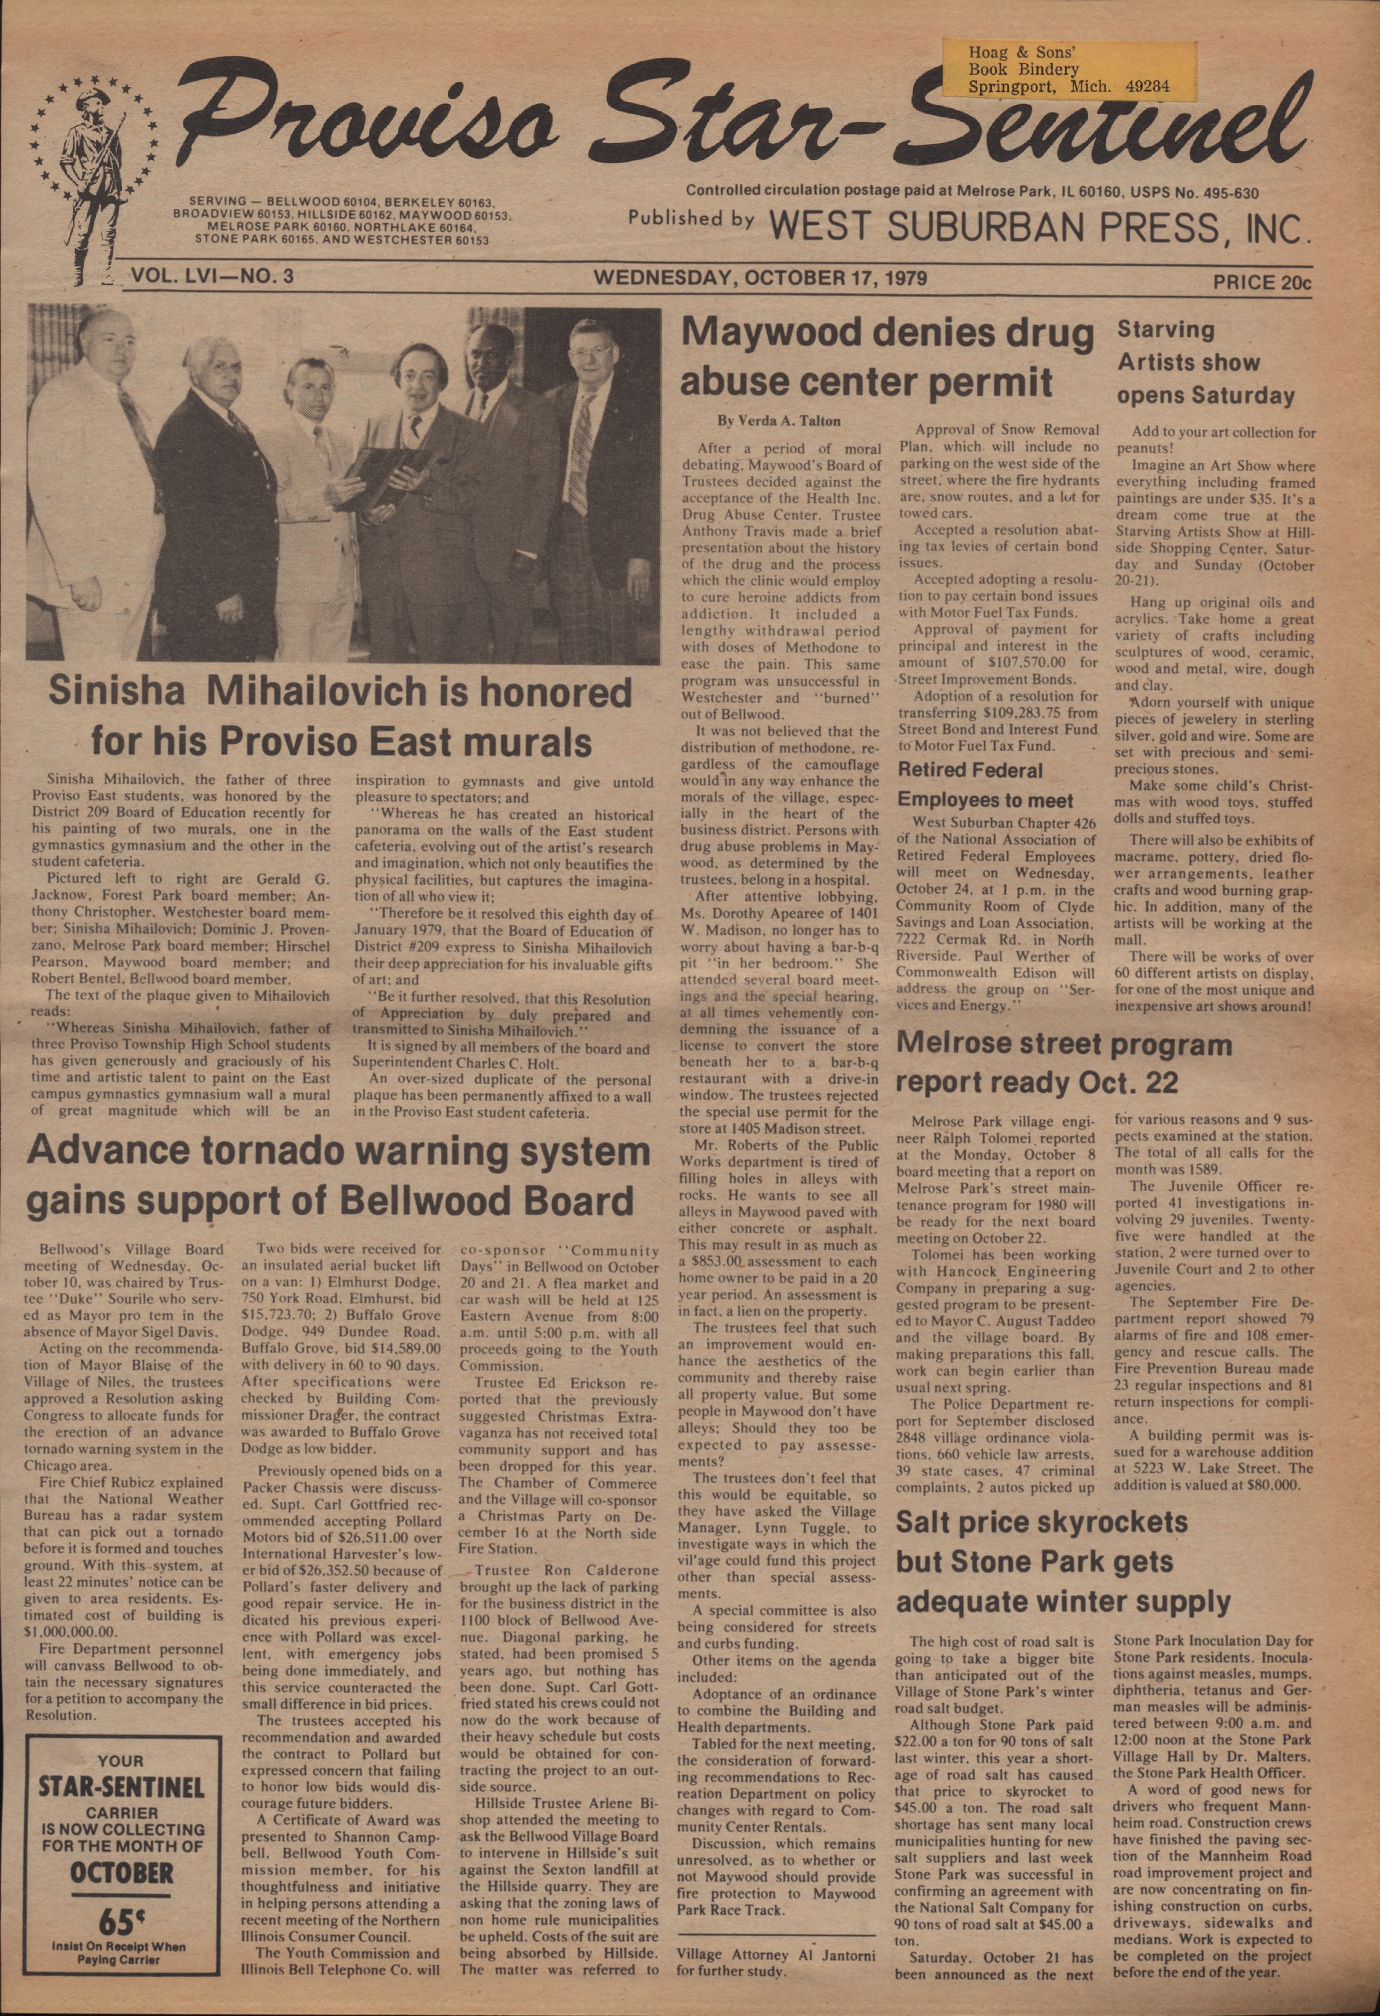 Proviso Star-Sentinel – 19791017